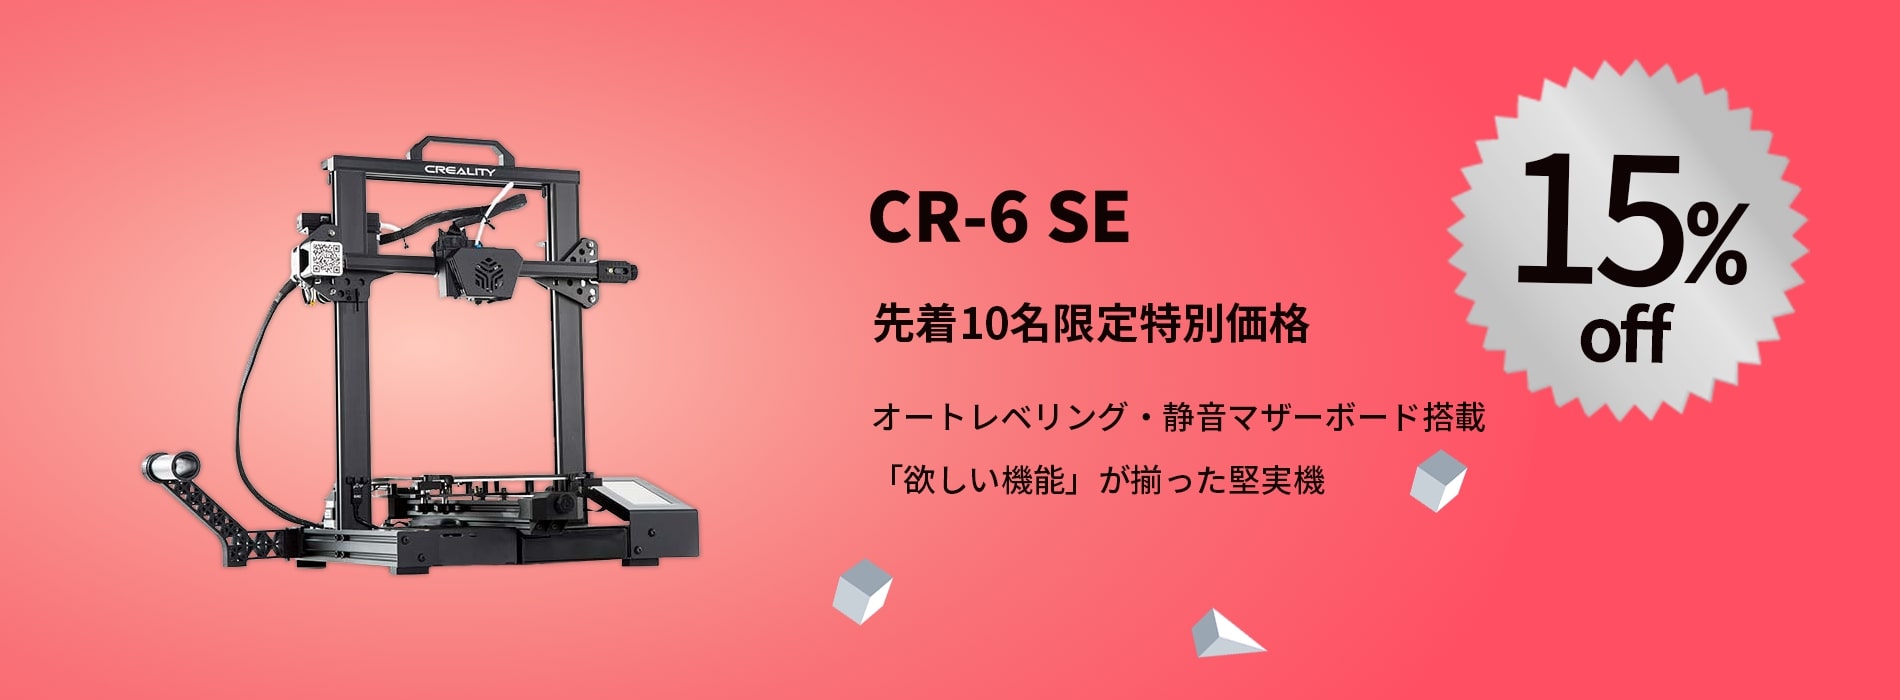 CR-6SE